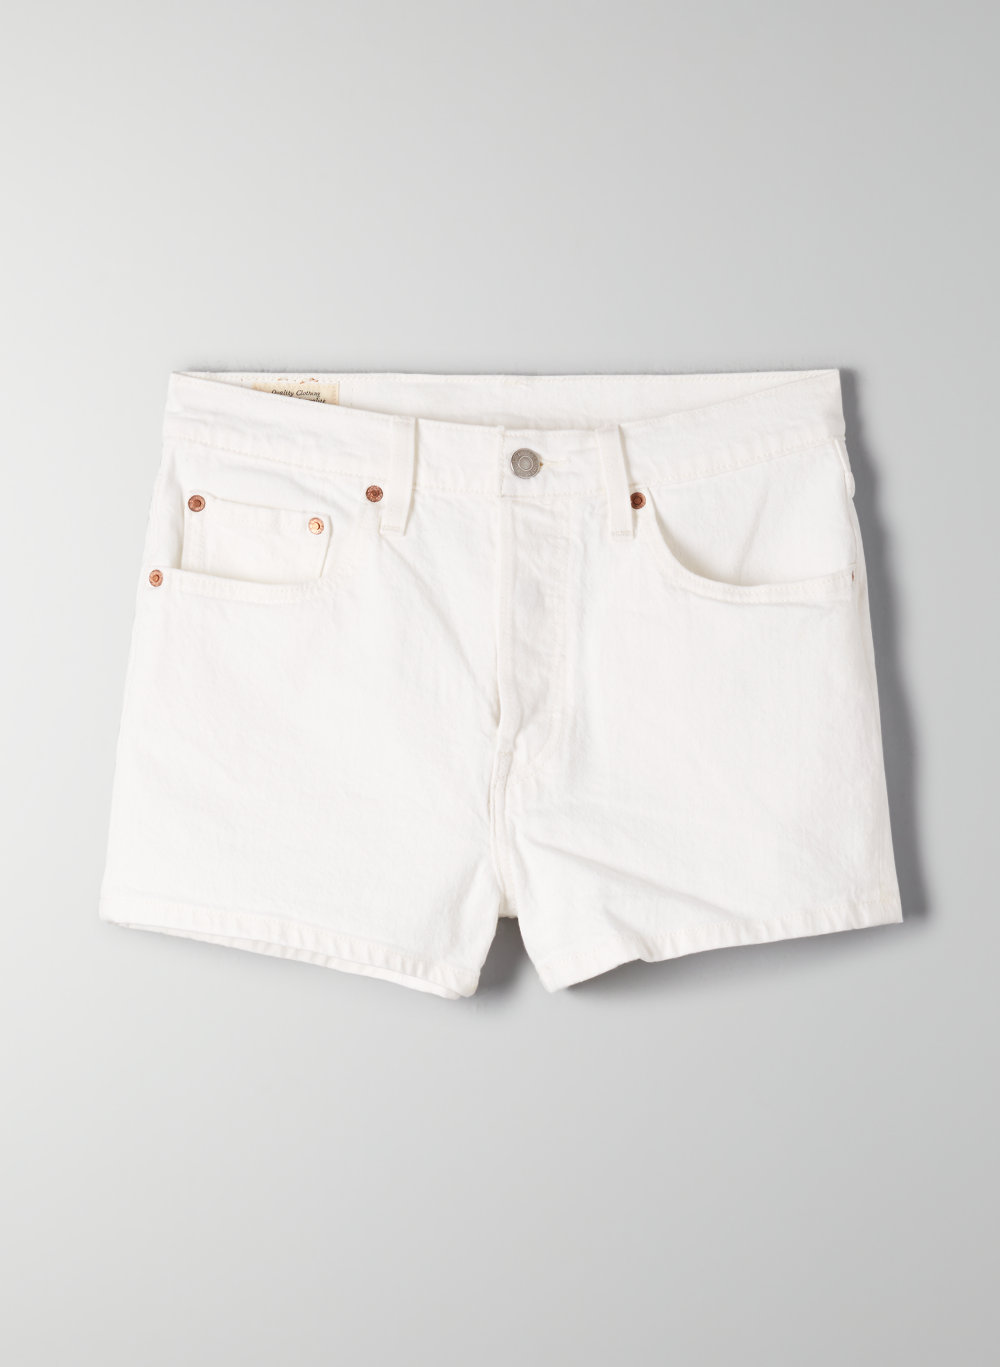 levis white shorts